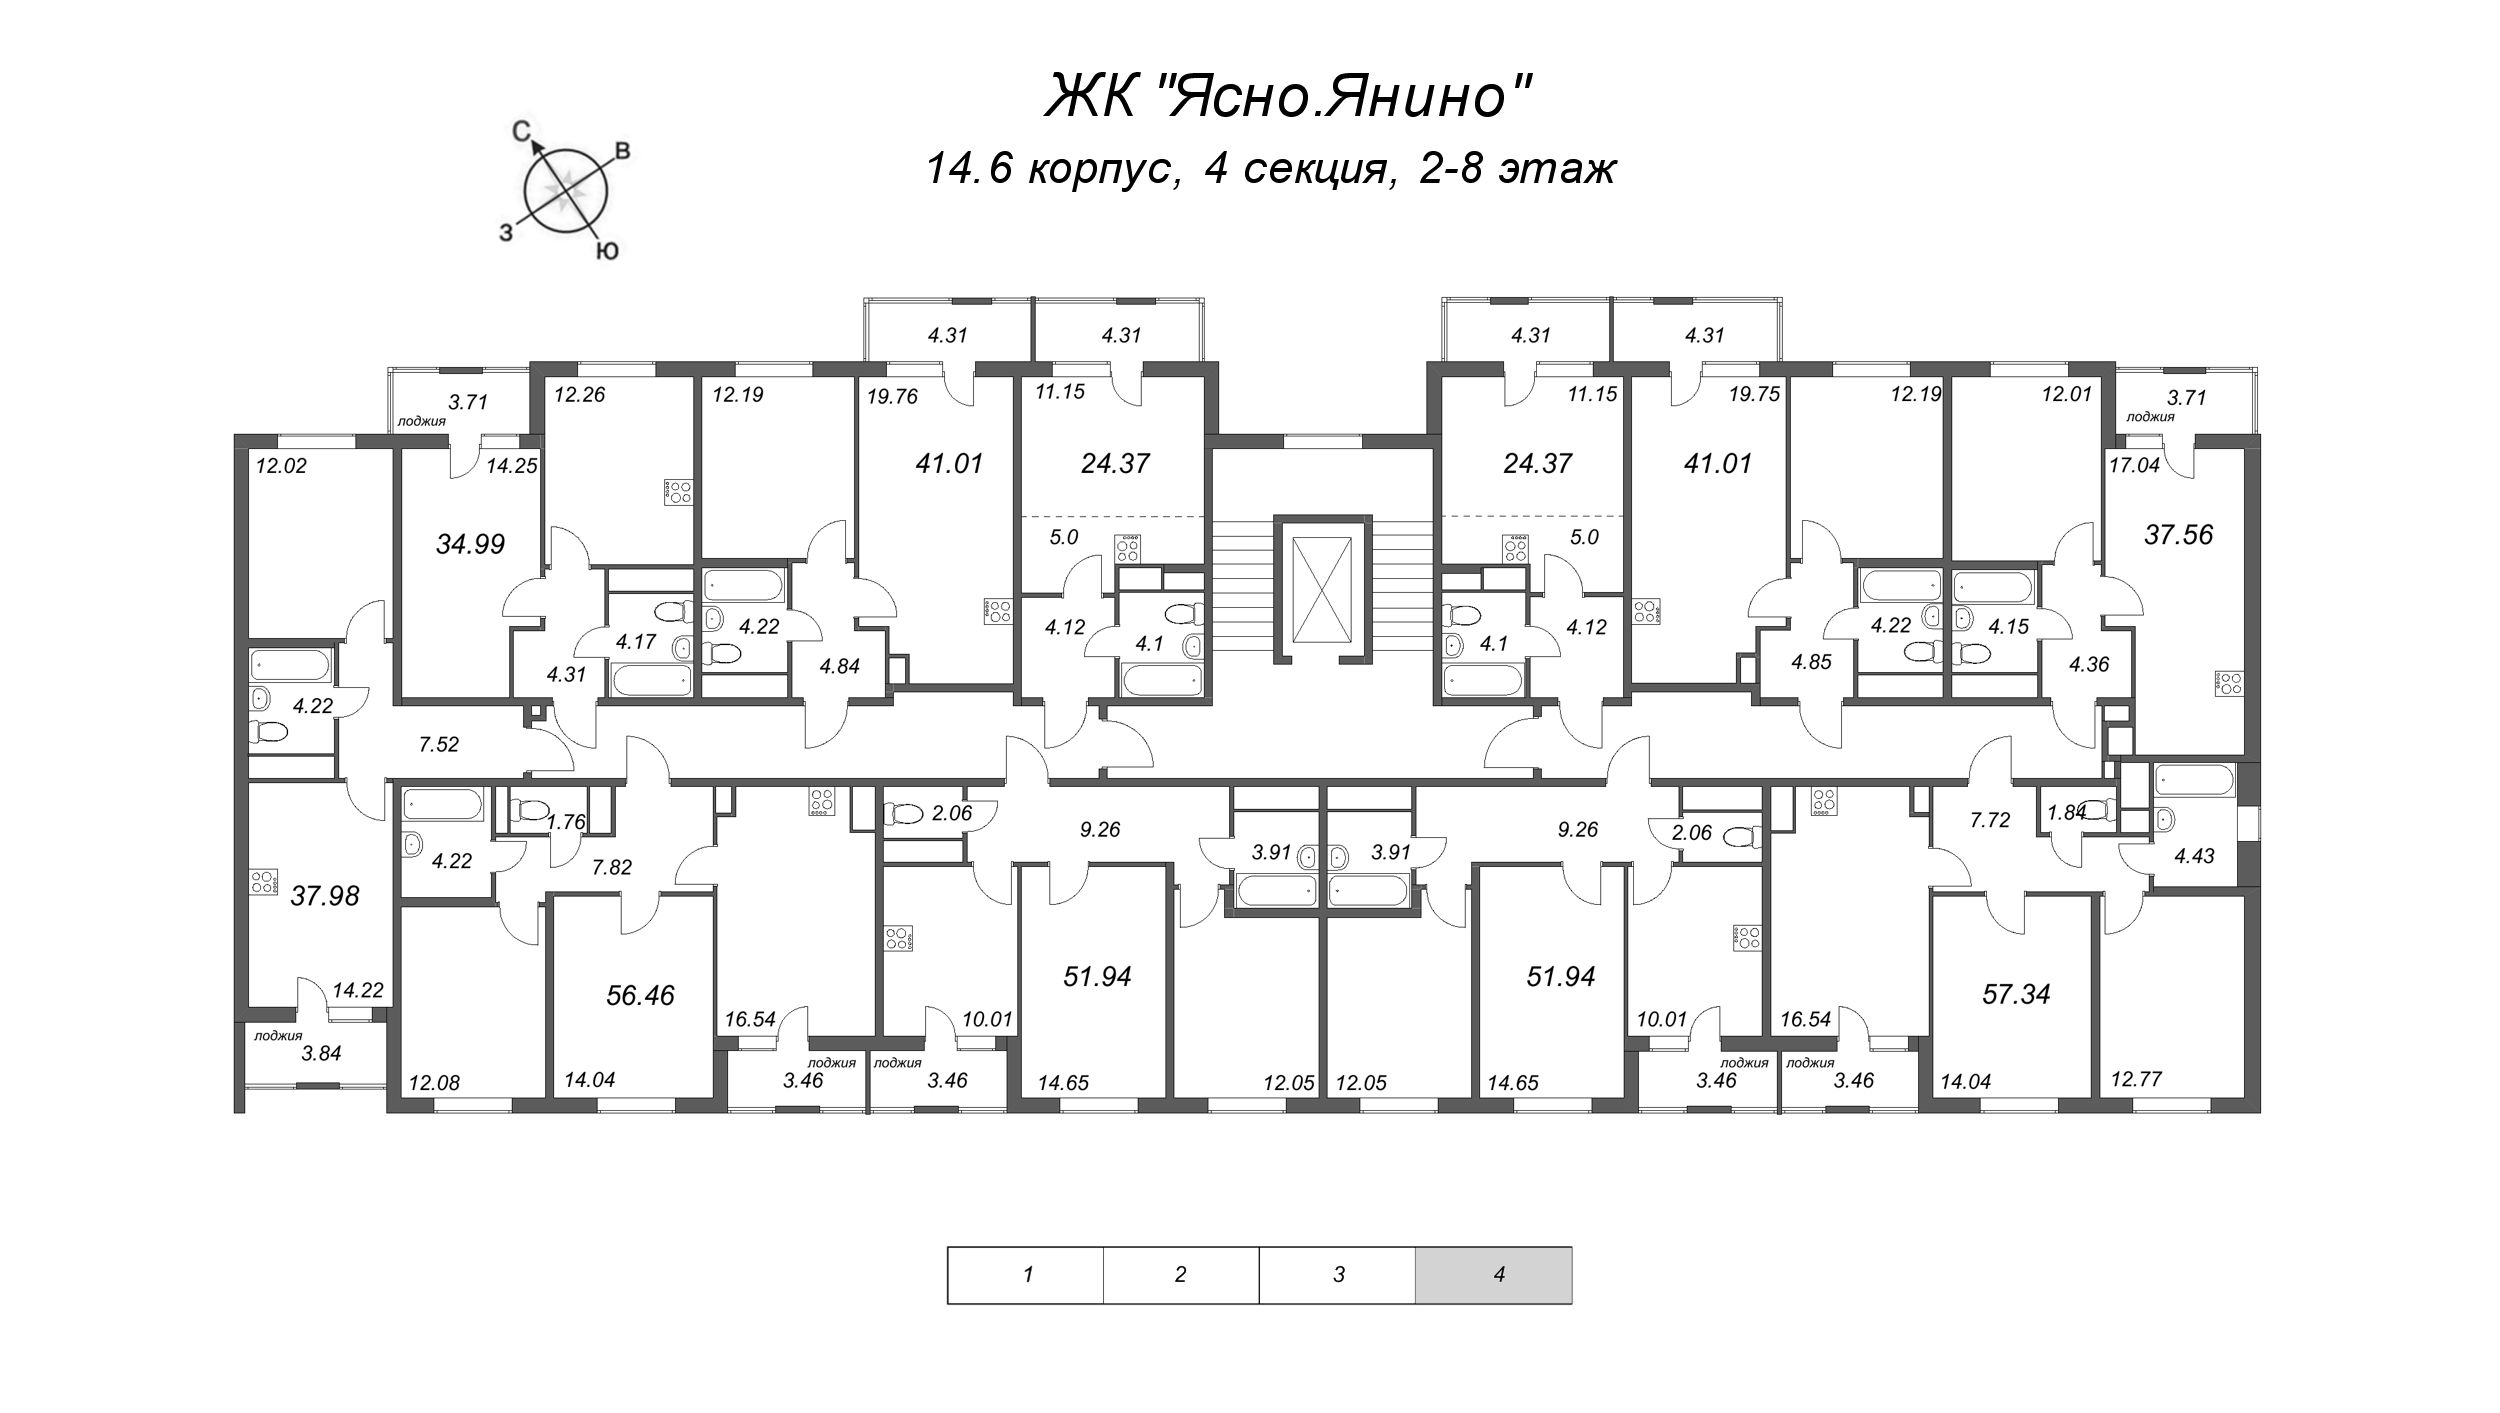 3-комнатная (Евро) квартира, 56.46 м² - планировка этажа